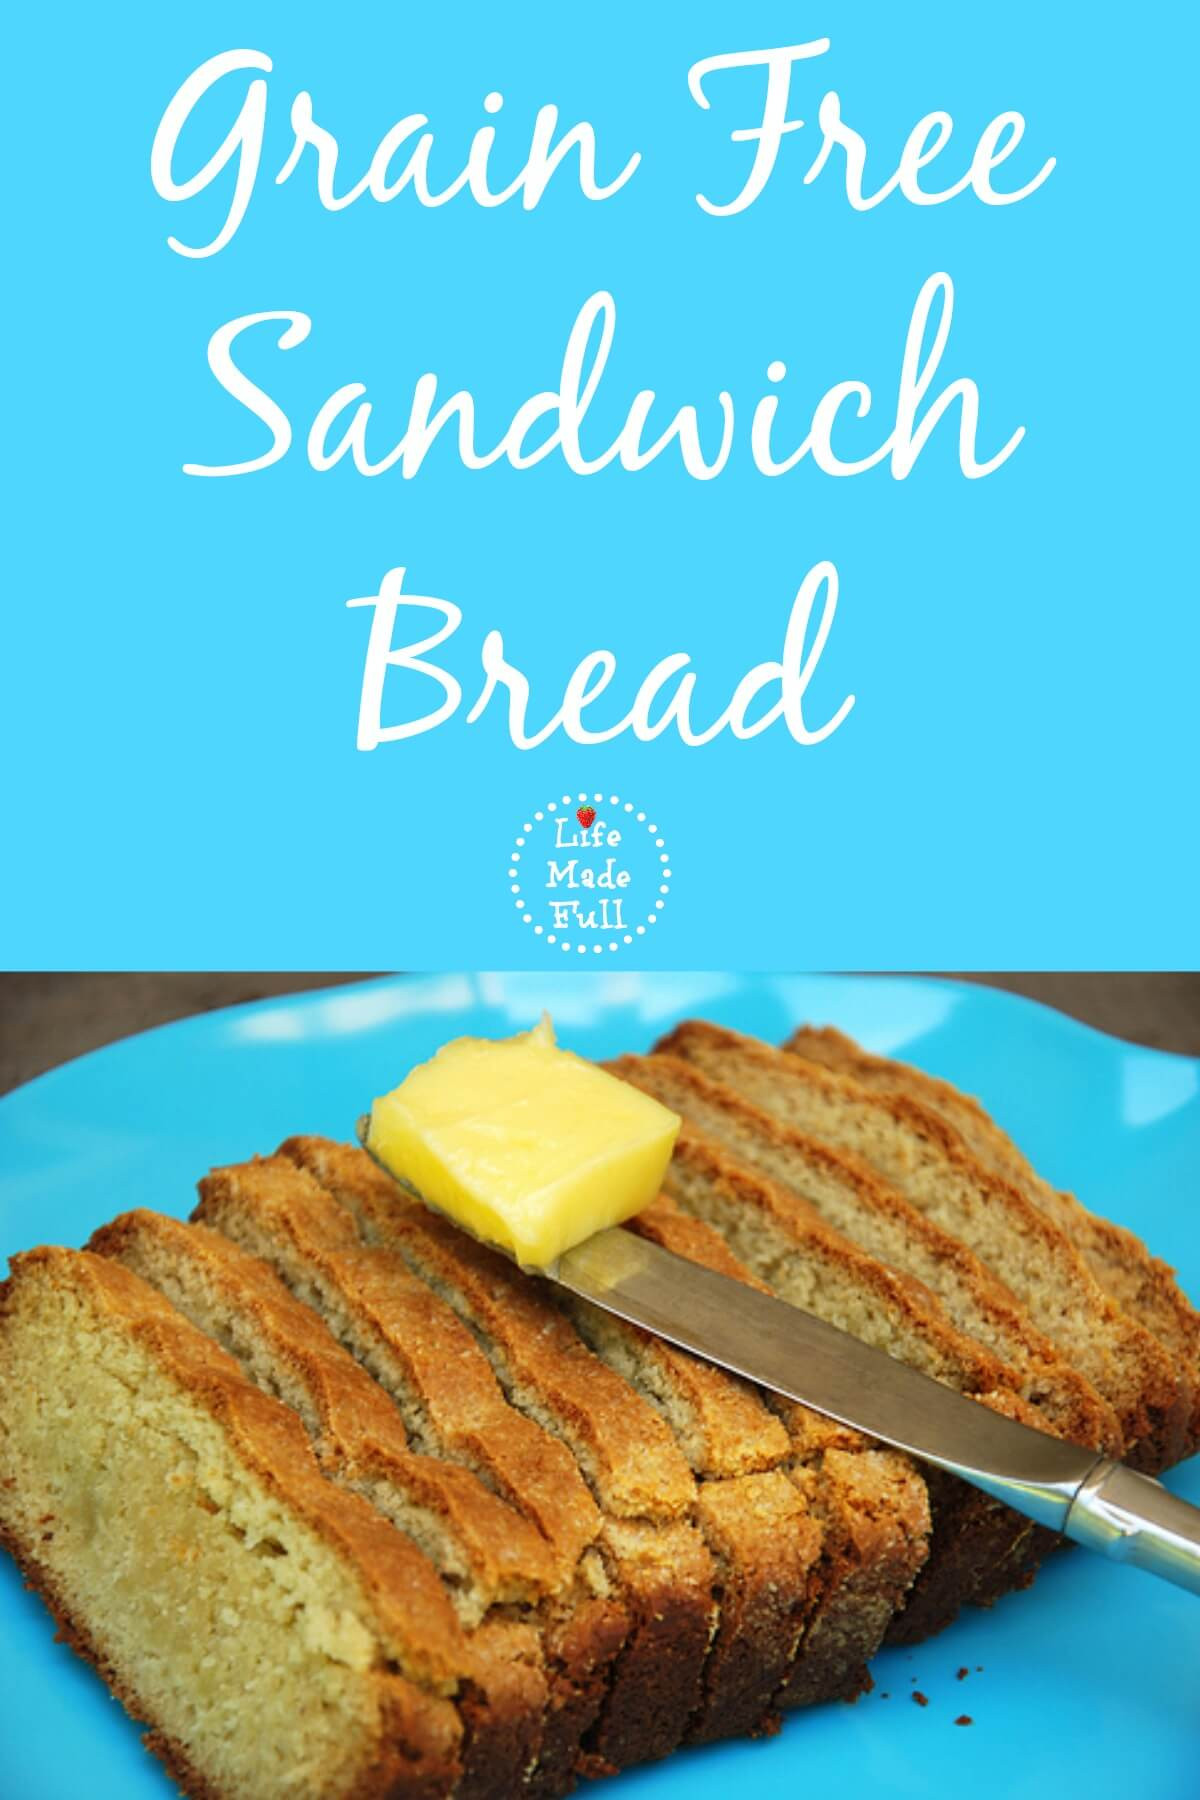 How To Make Grain Free Bread
 Grain Free Sandwich Bread Life Made Full